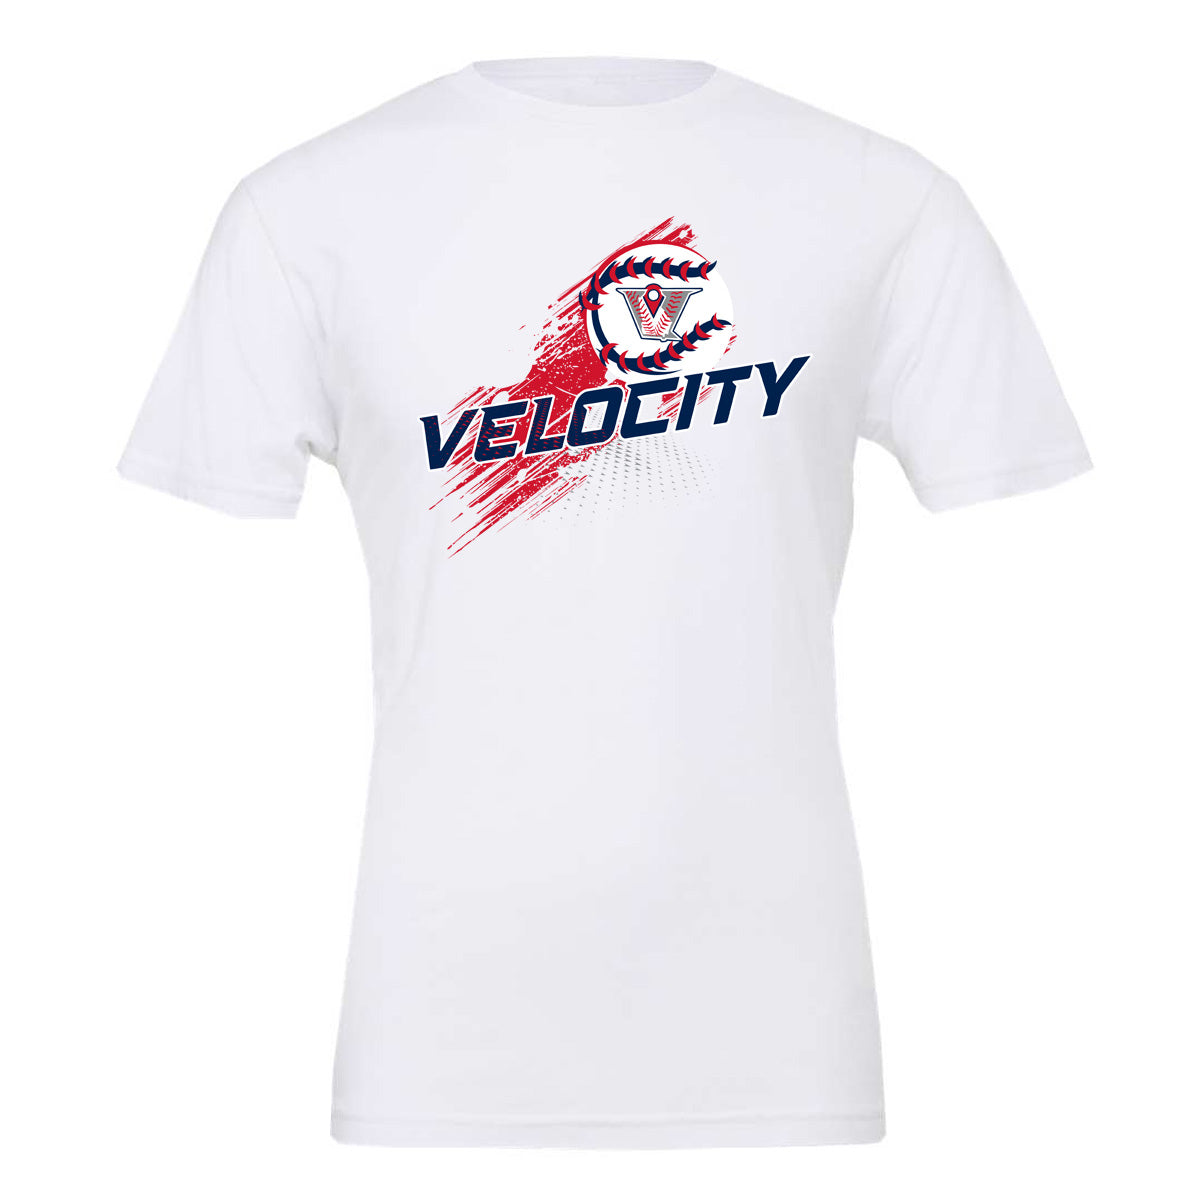 Velo BB - Velocity Streak - White (Tee/Hoodie/Sweatshirt) - Southern Grace Creations